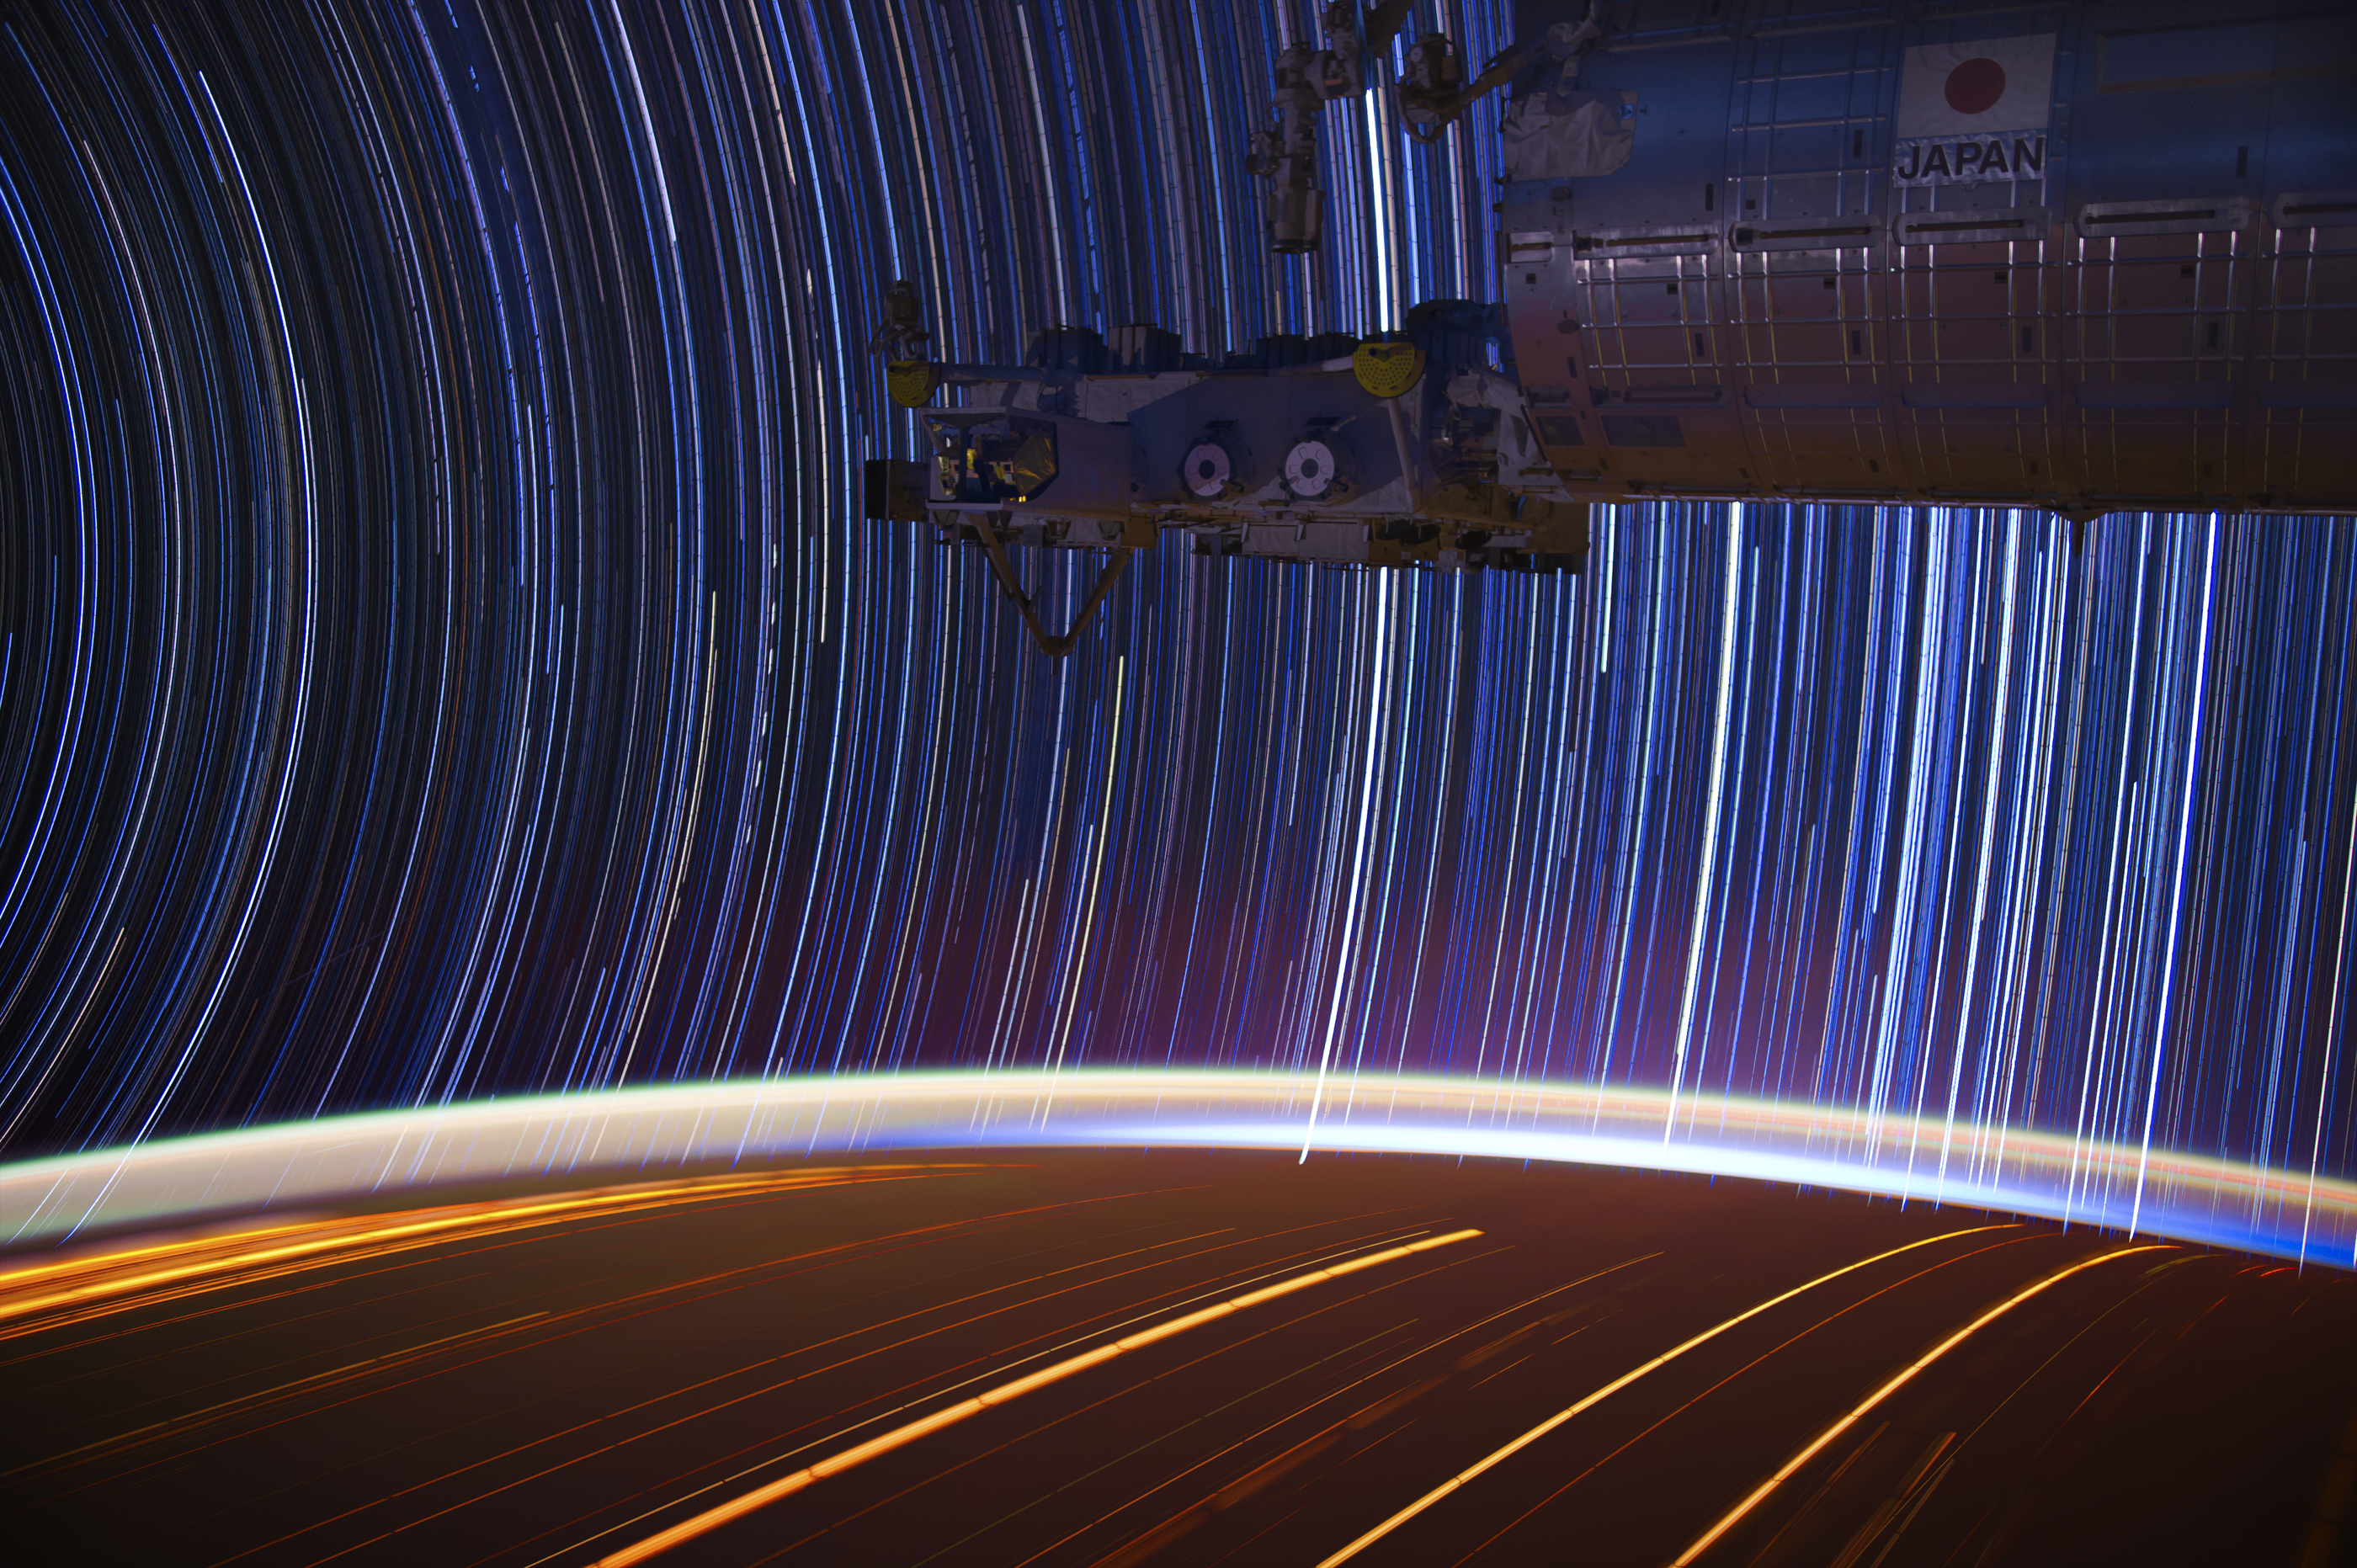 Star trails. Credit: Donald Pettit/NASA